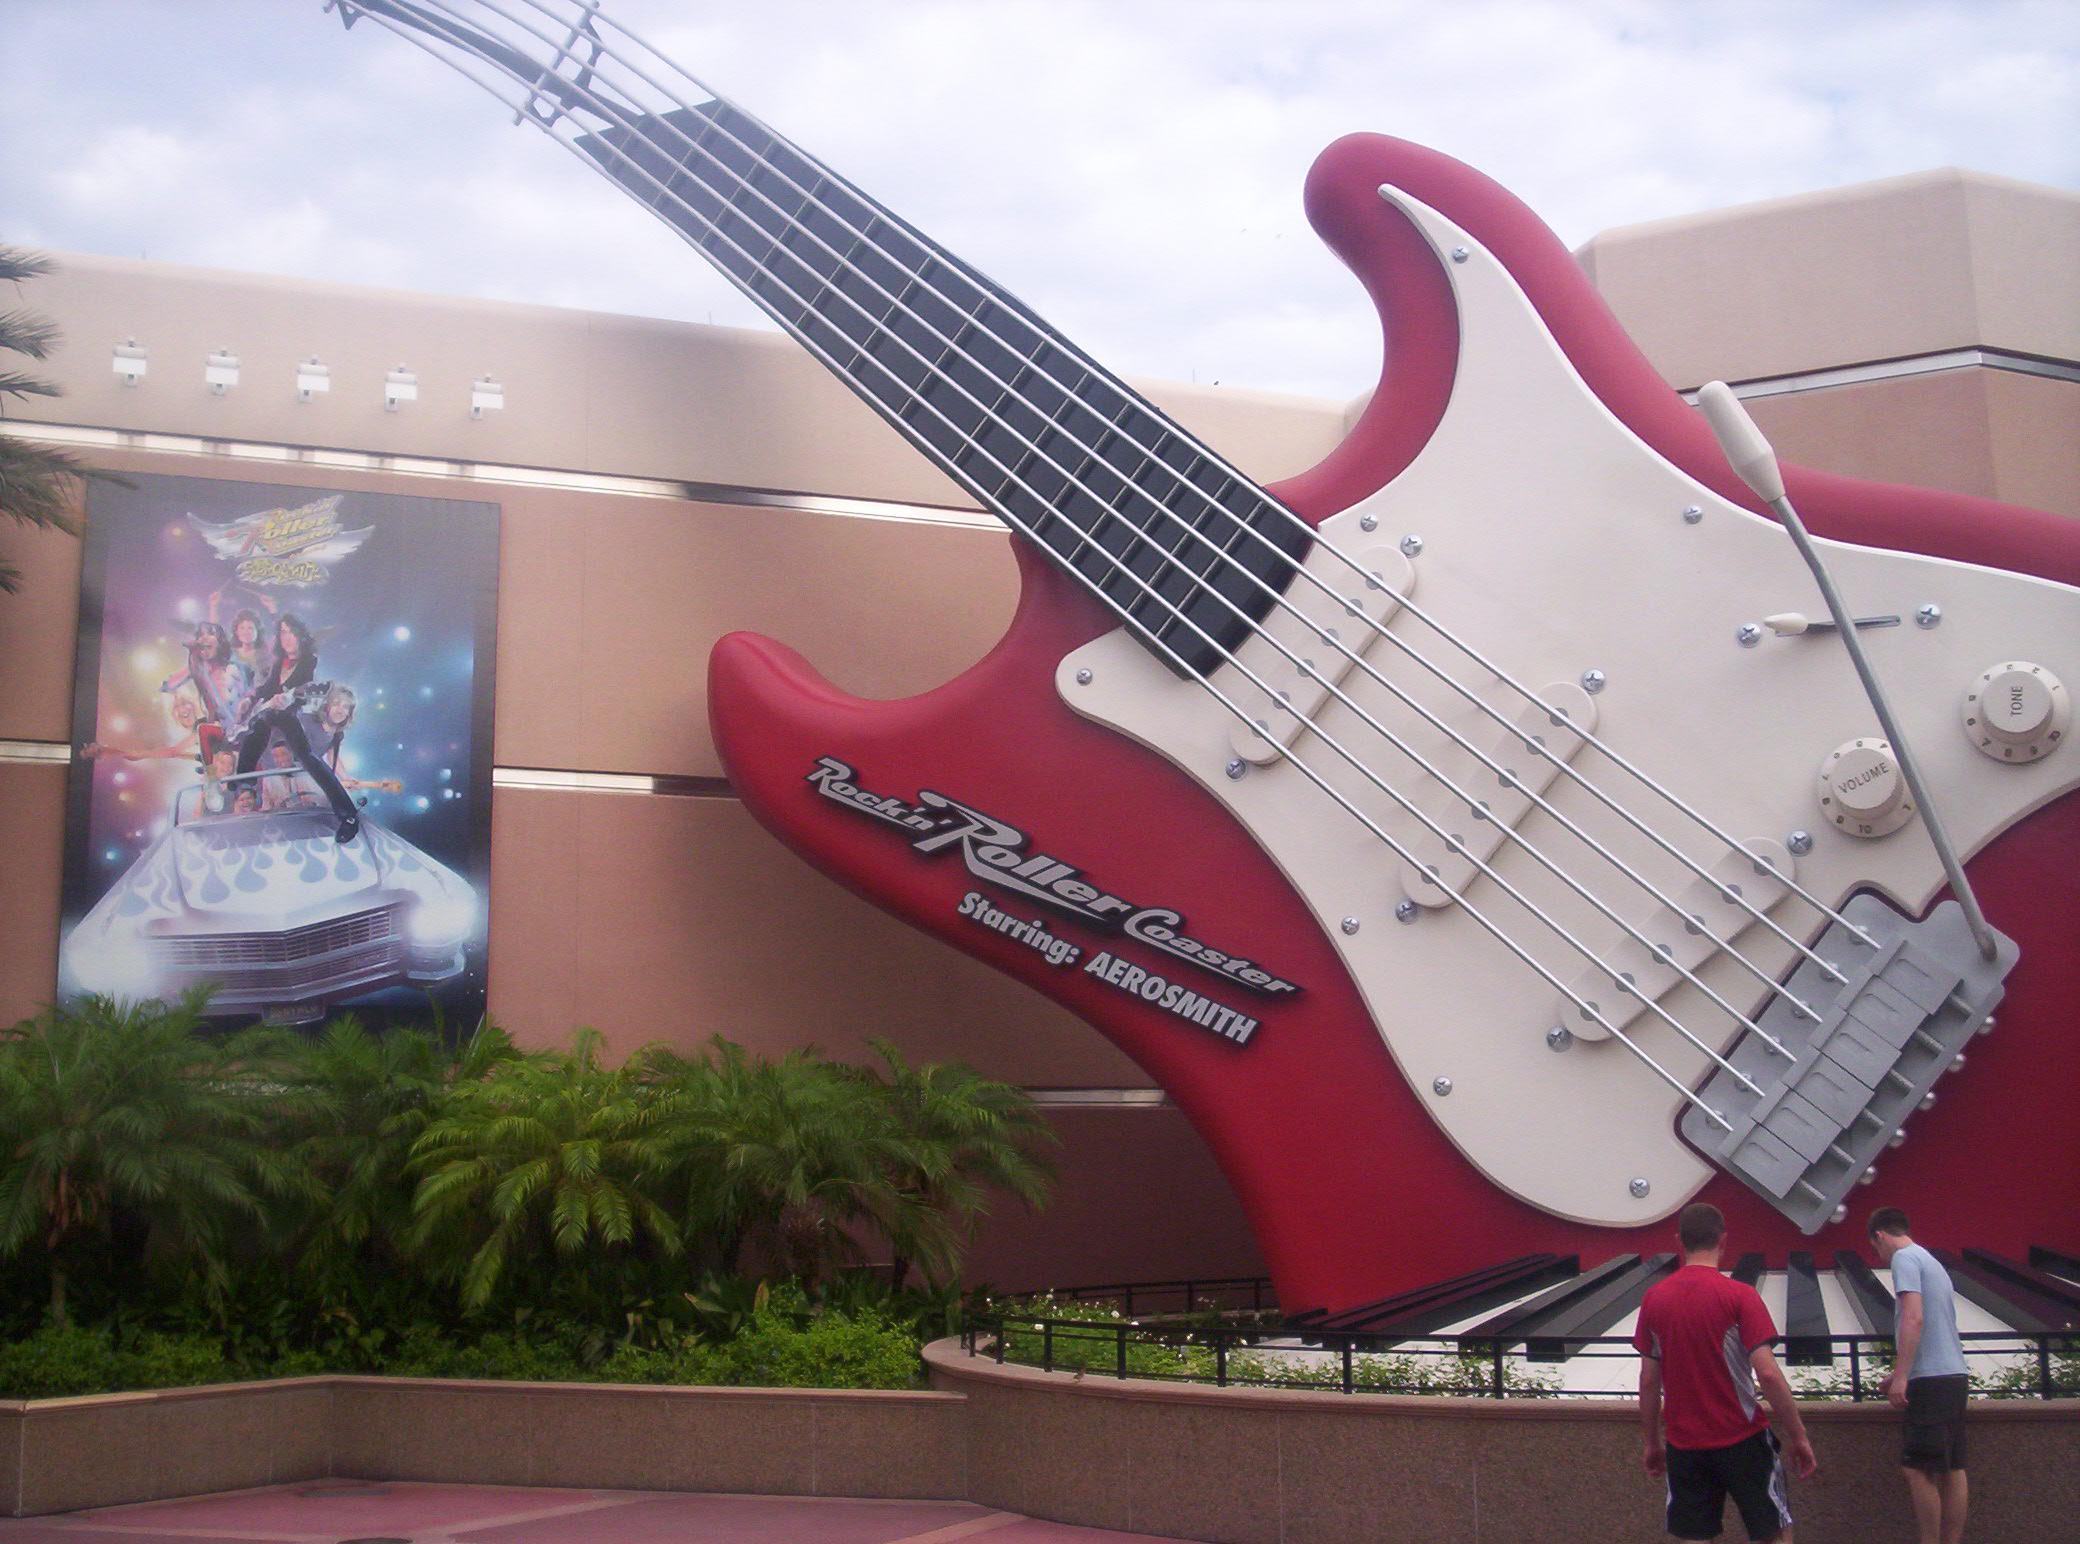 Rock 'n' Roller Coaster Starring Aerosmith, Disney Wiki